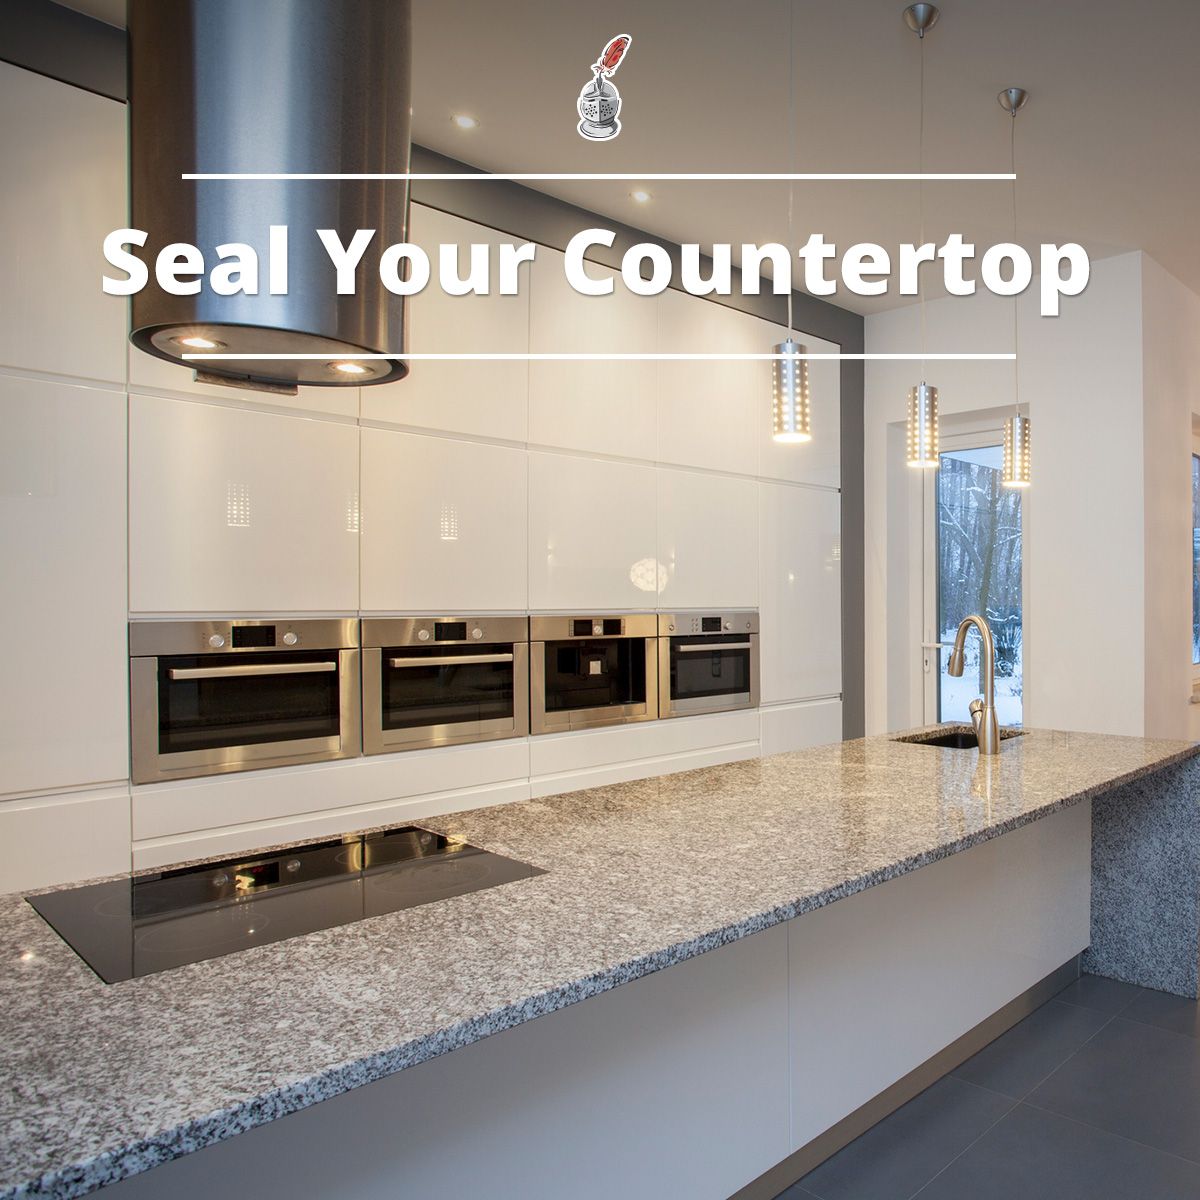 Seal Your Countertop